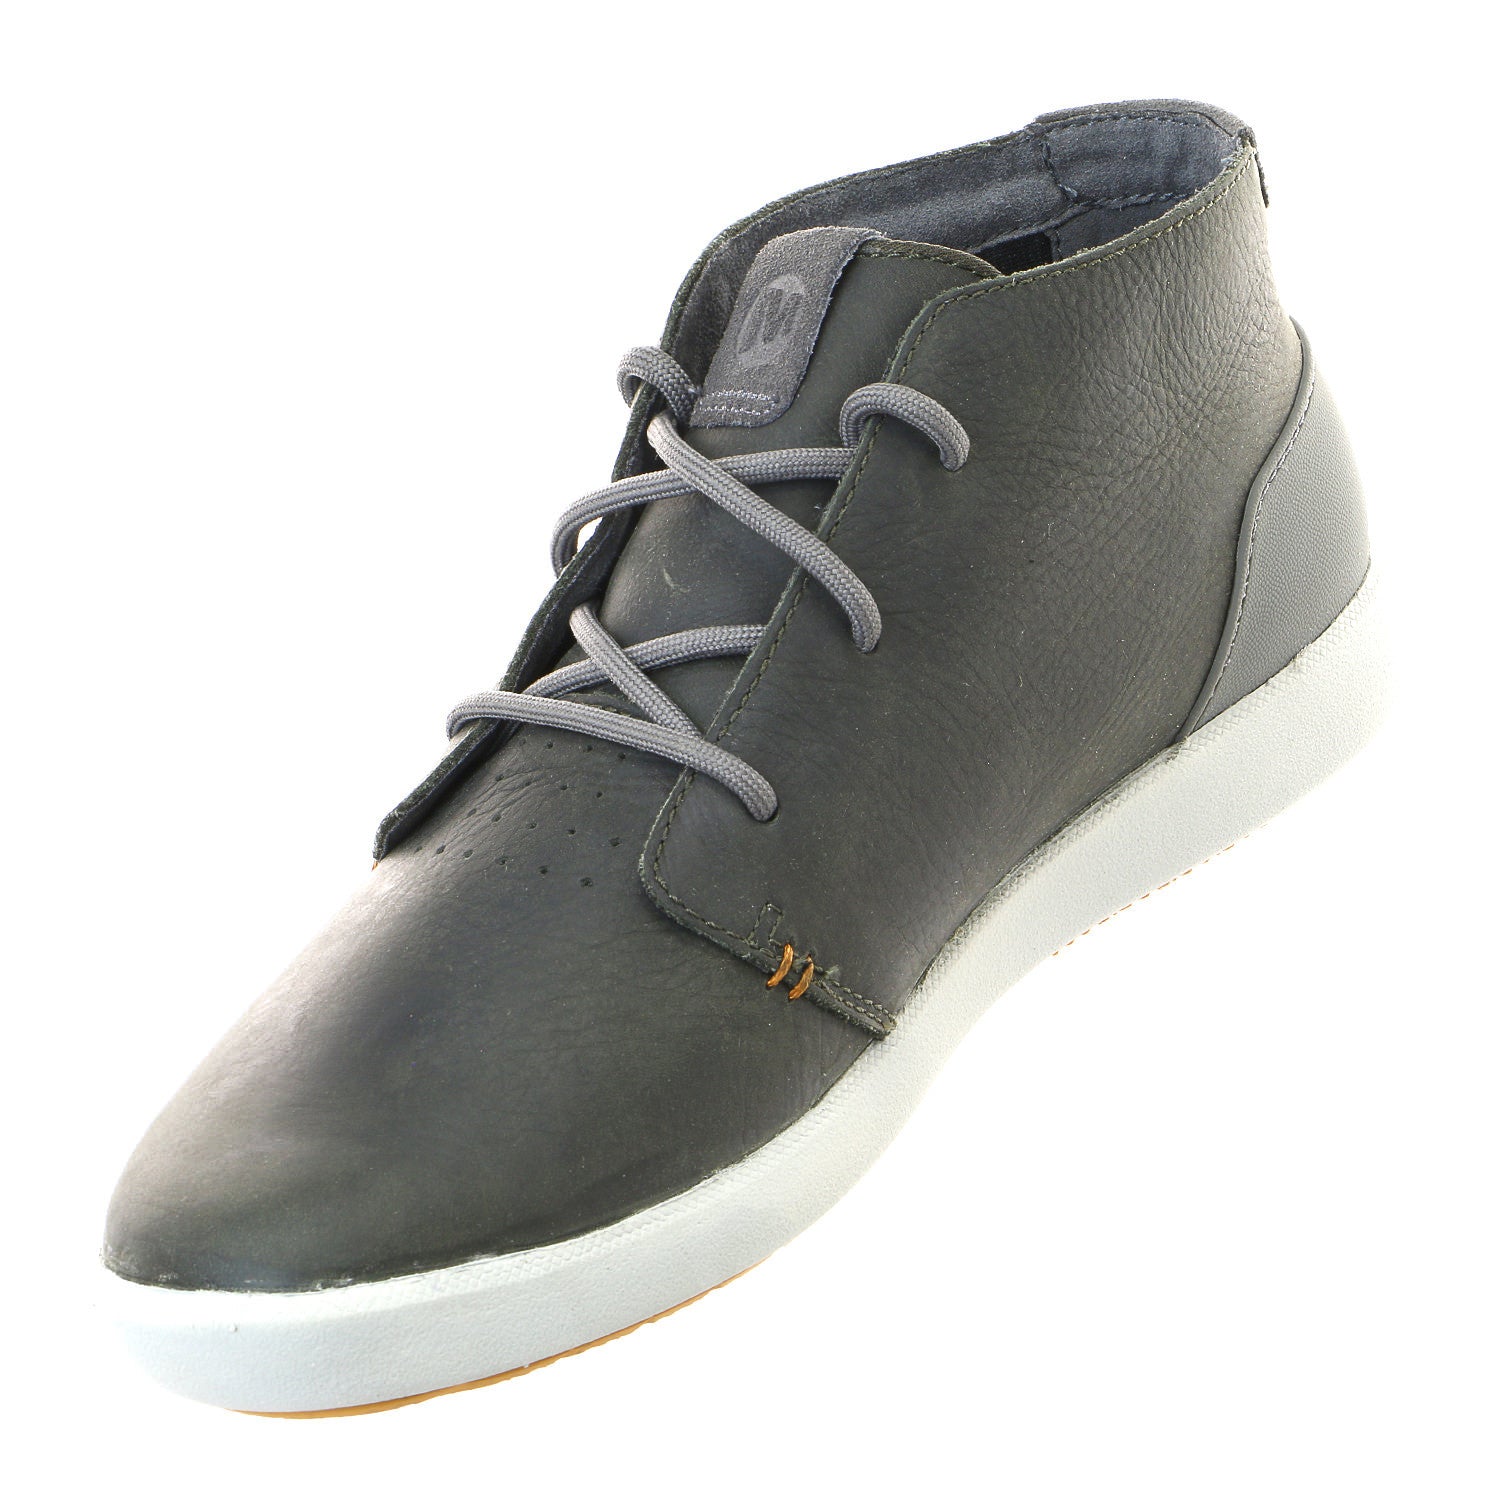 Merrell Bolt Chukka Fashion Boot Sneaker - Mens - Shoplifestyle